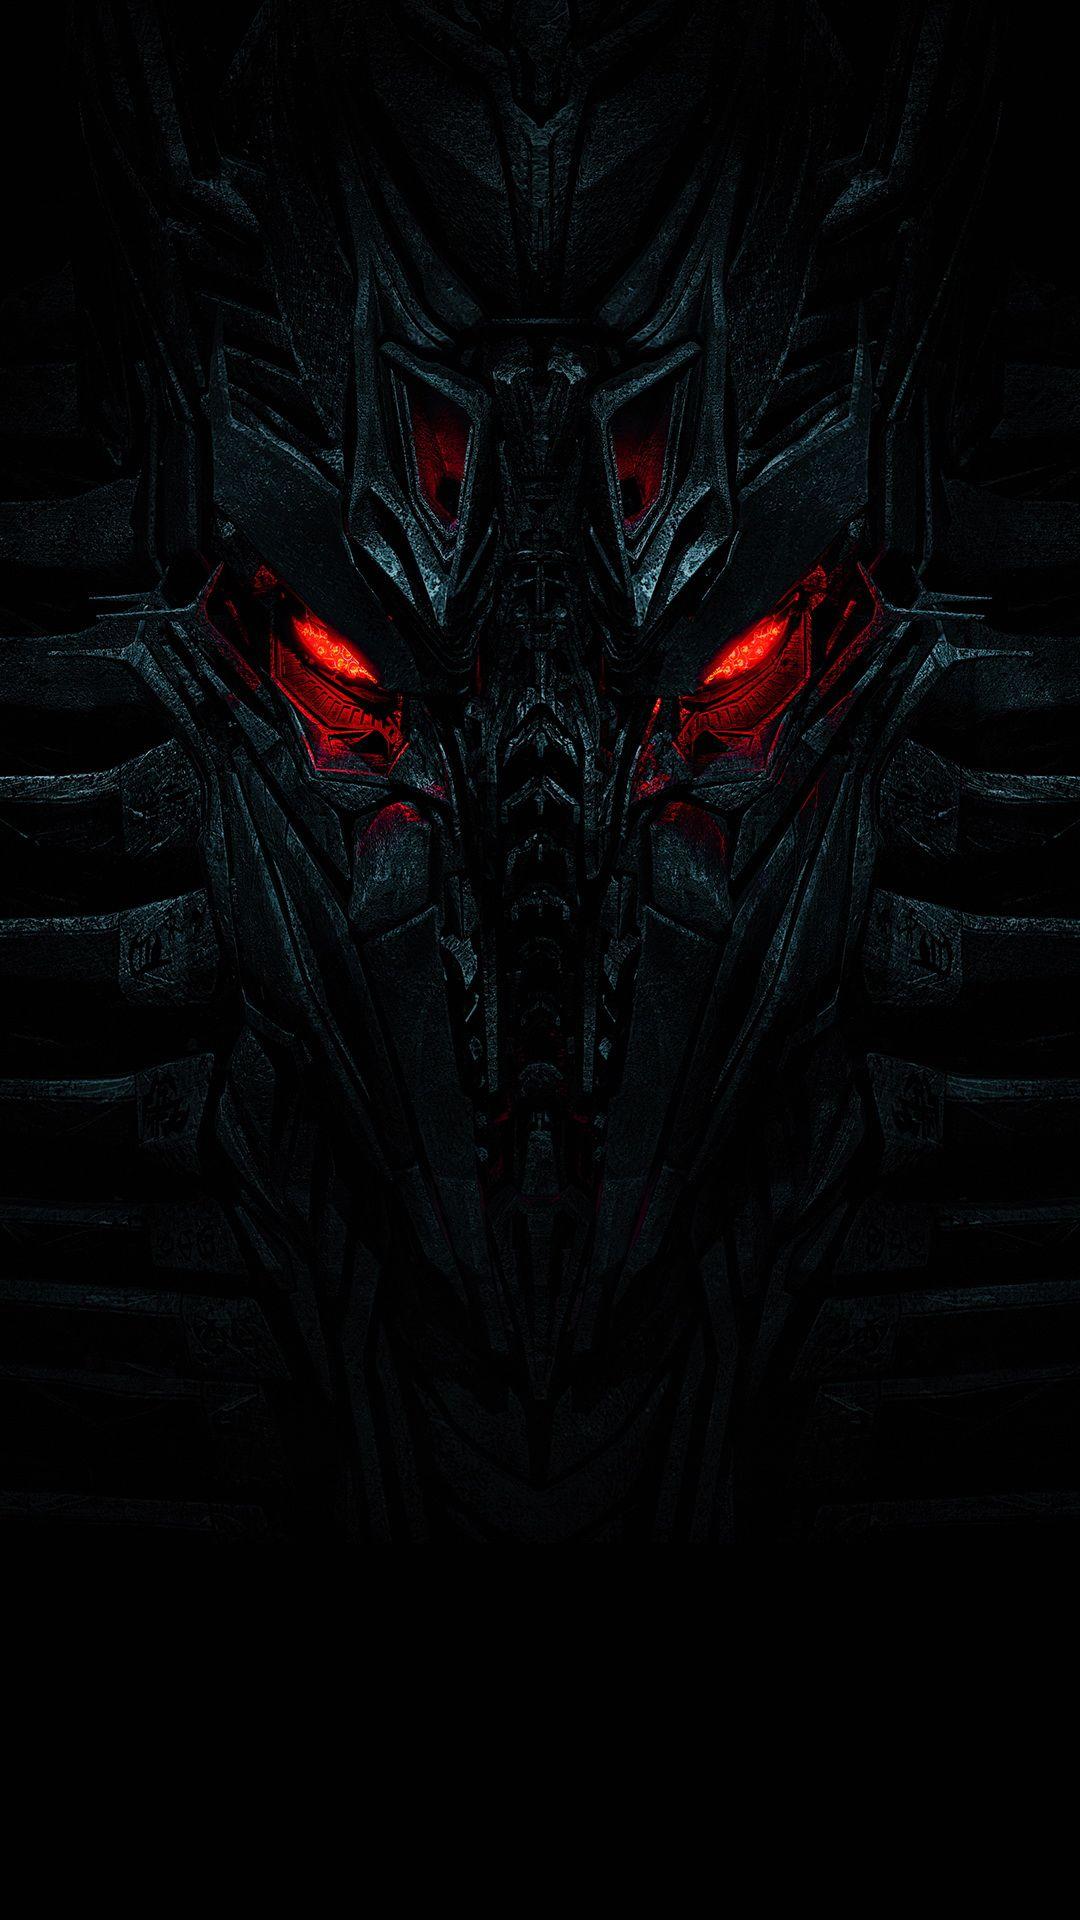 Transformers Decepticon Revenge Of The Fallen Android Wallpaper free download